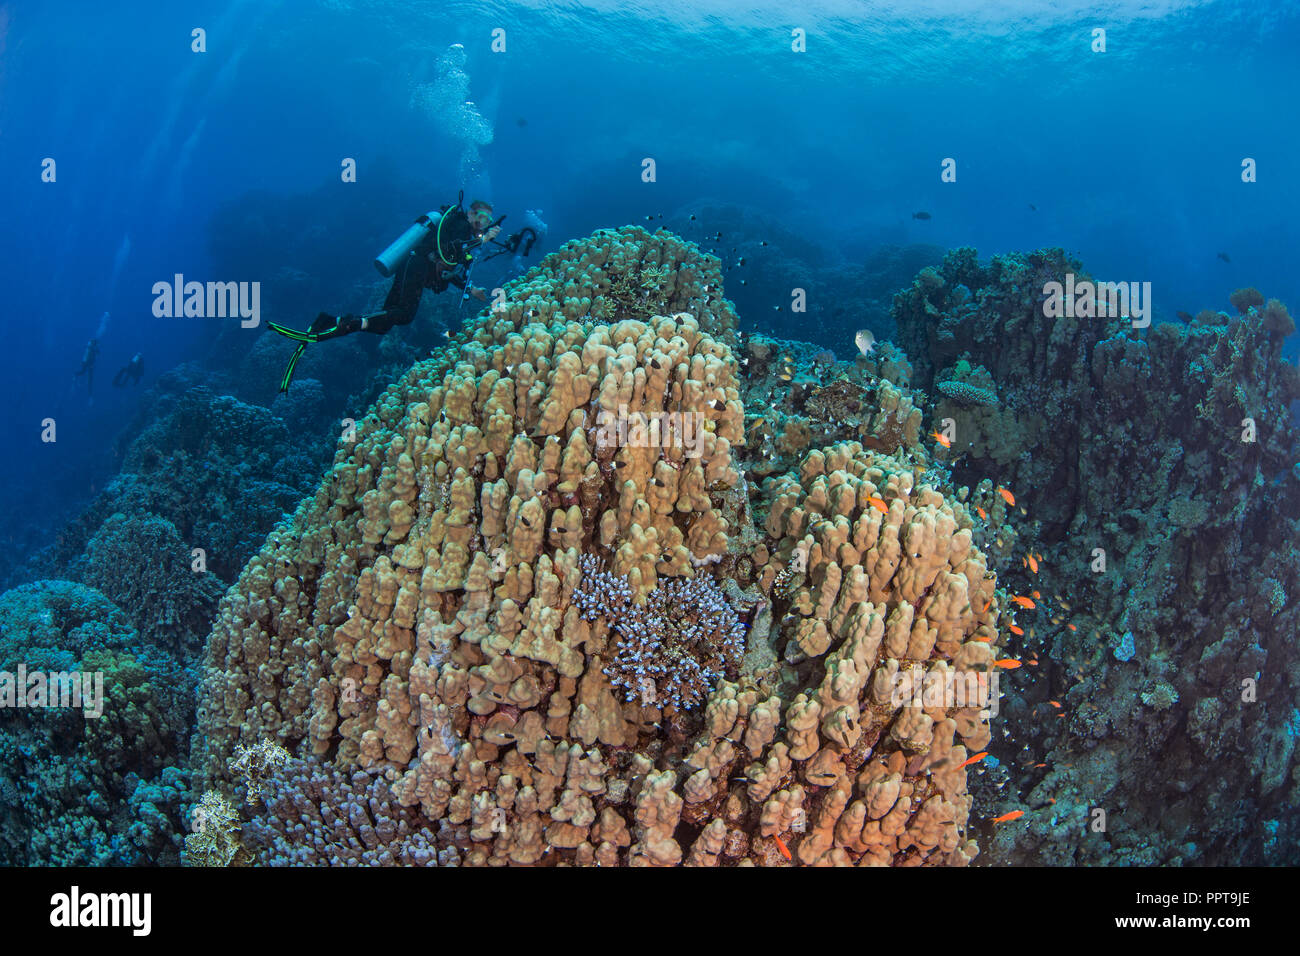 Weibliche Scuba Diver, videophotographer Datensätze Marine Life assoziierten Große porite Dome Coral Reef in einer bergigen Gegend des Roten Meeres. Fury Shoals, 2 Stockfoto